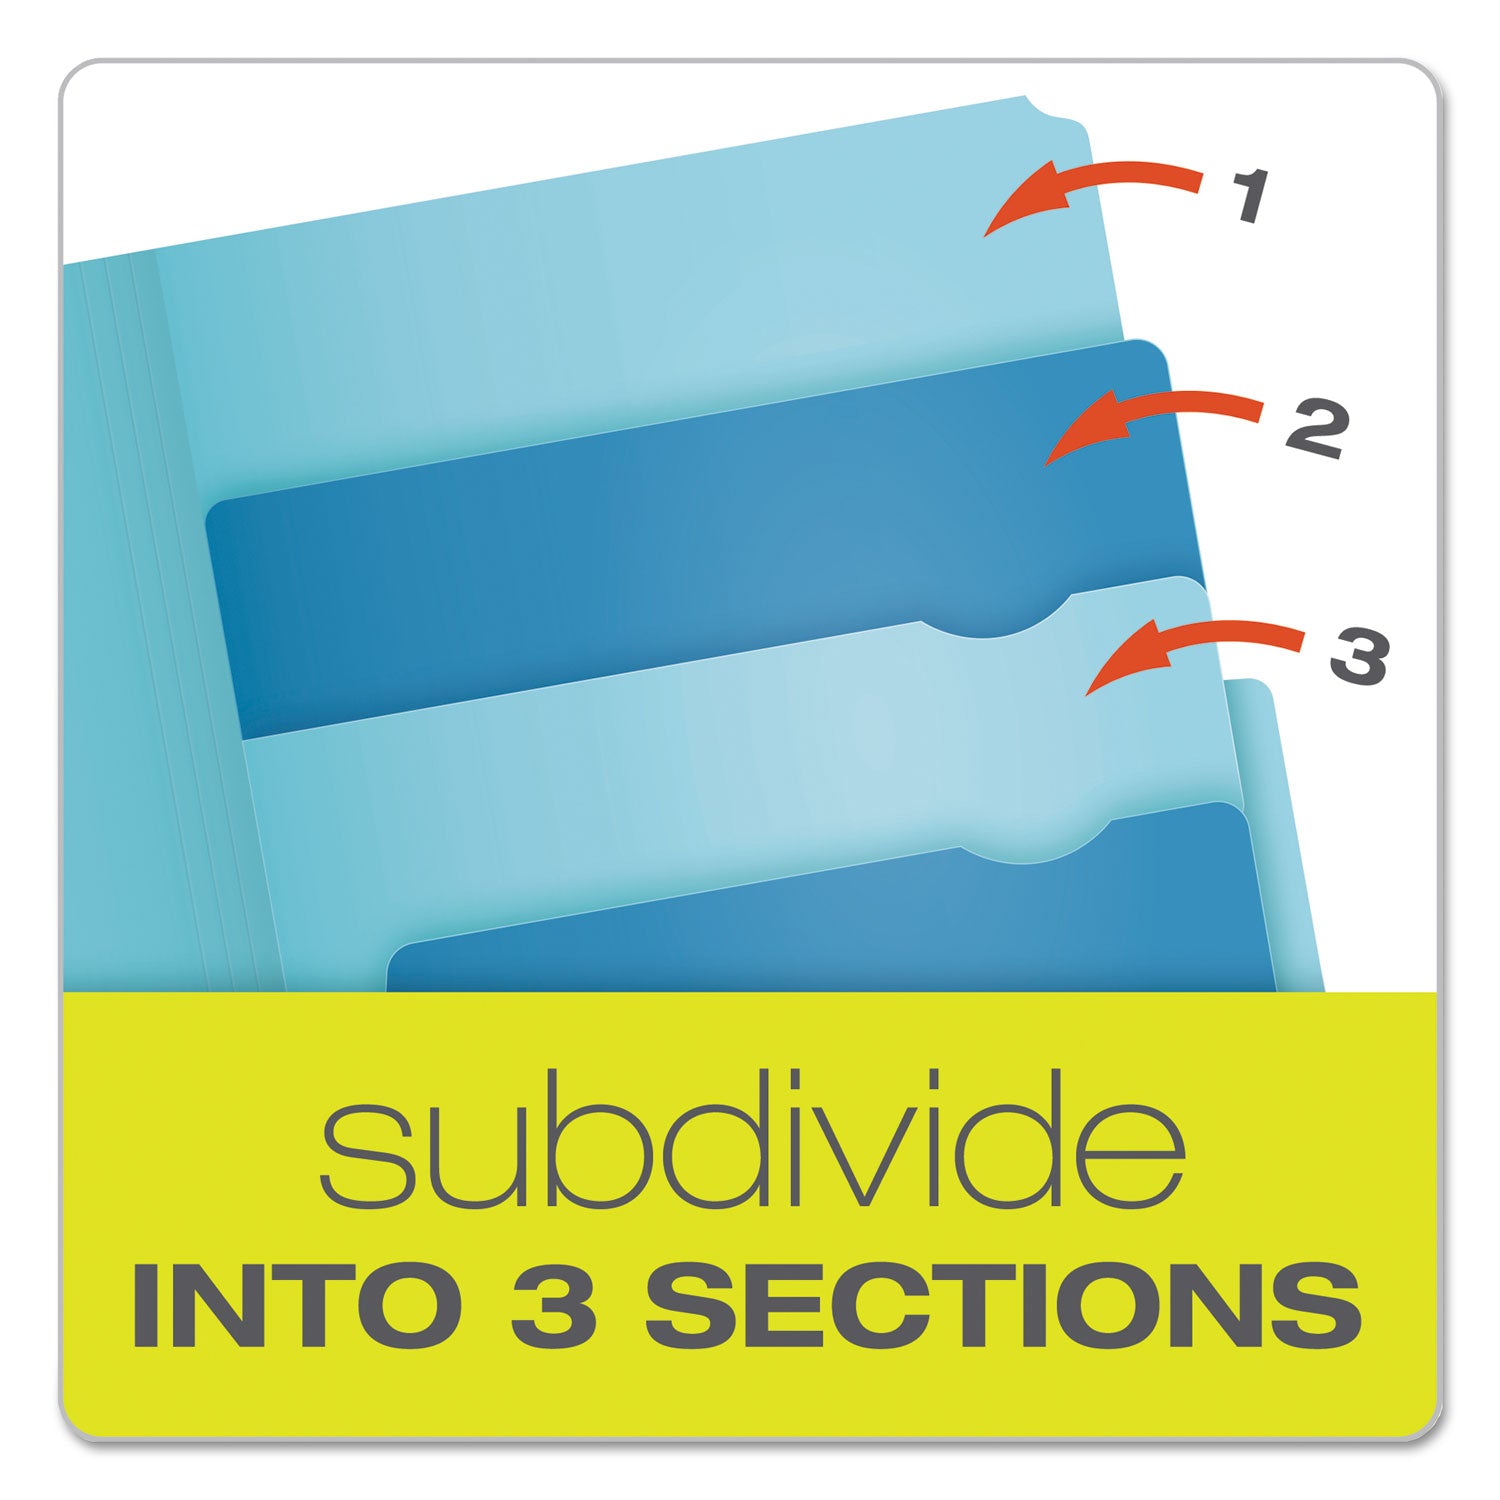 Divide It Up File Folder, 1/2-Cut Tabs: Assorted, Letter Size, 0.75" Expansion, Assorted Colors, 12/Pack - 